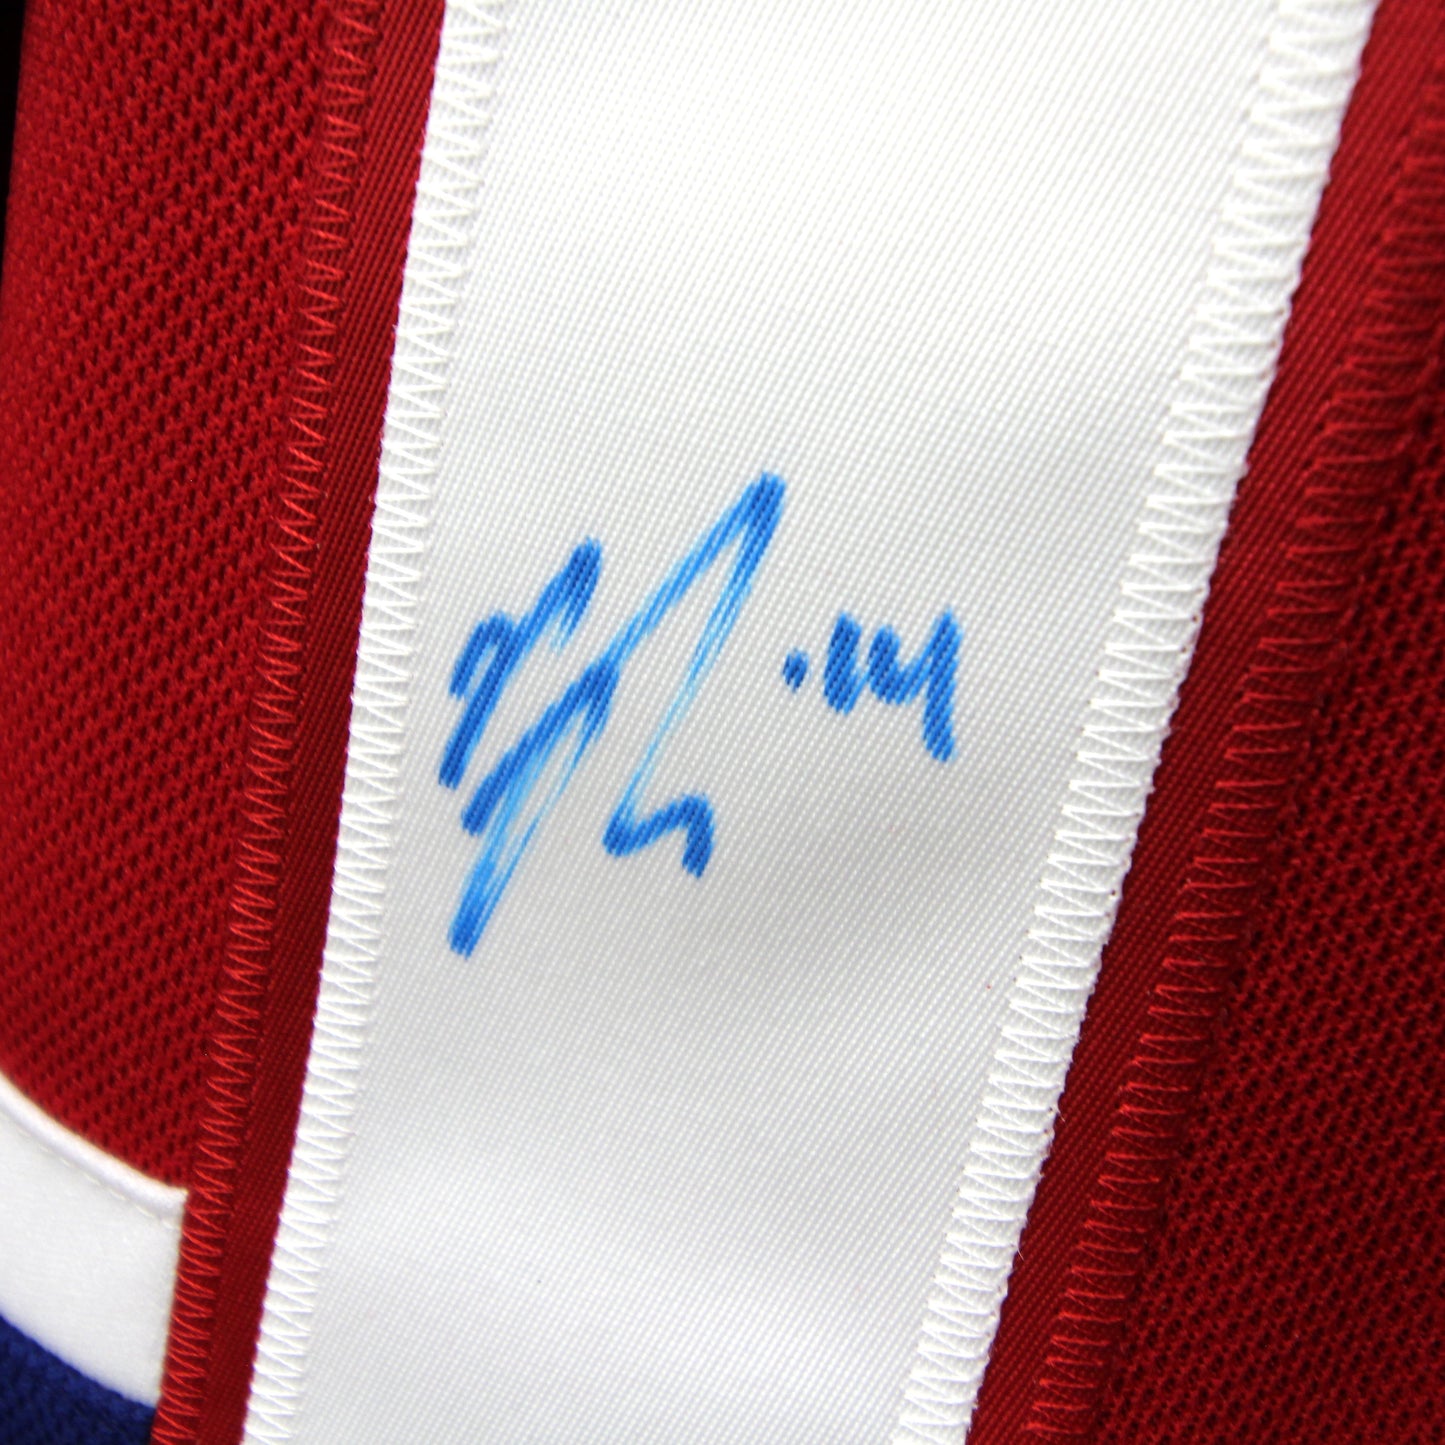 Nick Suzuki - Canadiens - Autographed Jersey / Chandail autographié